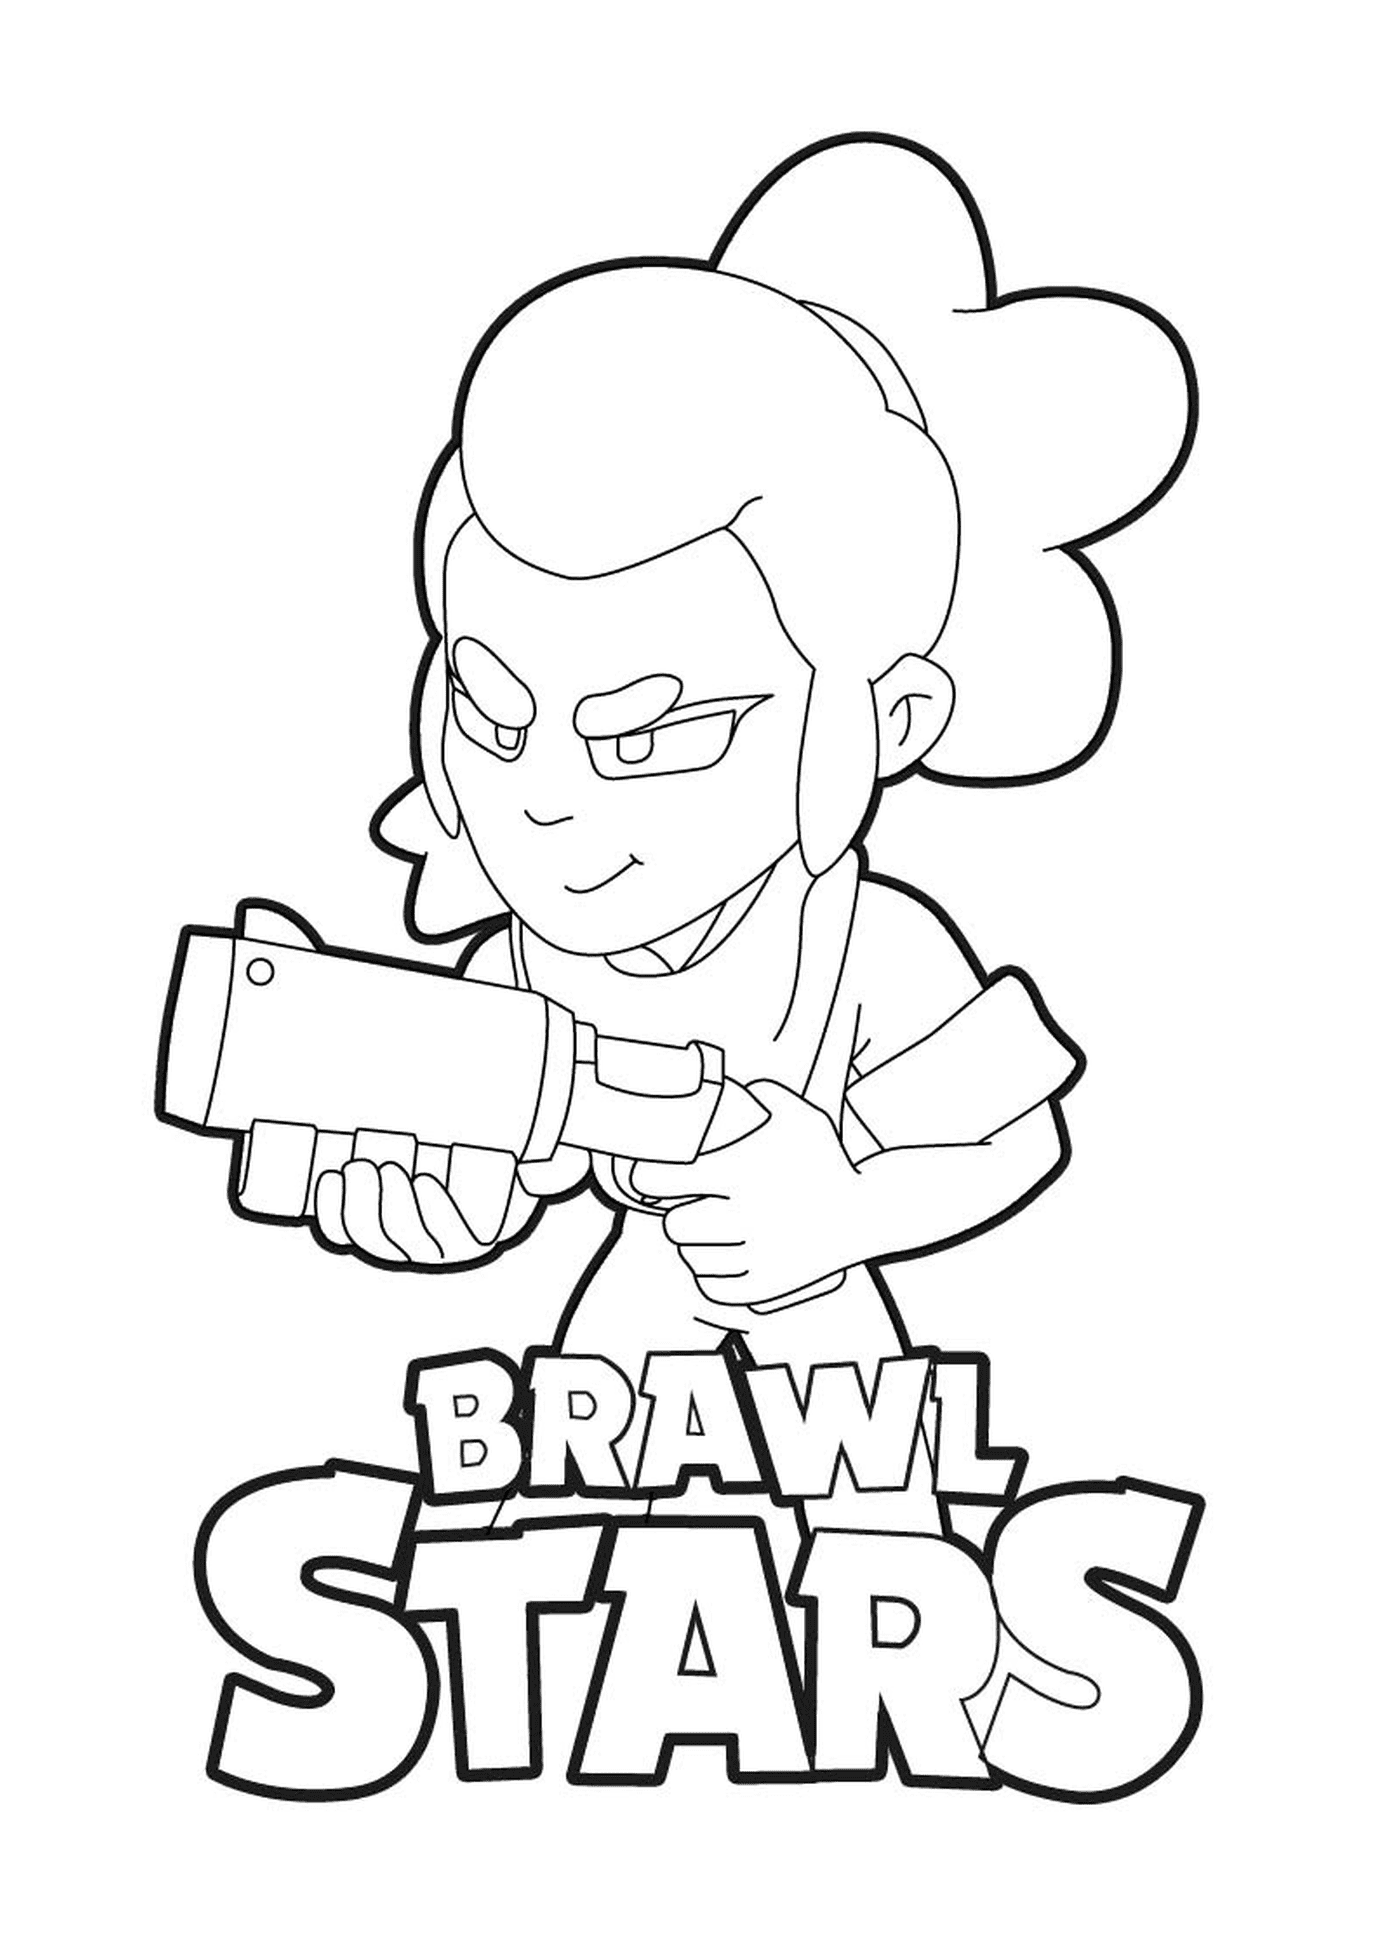  Ein Brawl Stars-Charakter namens Shelly 